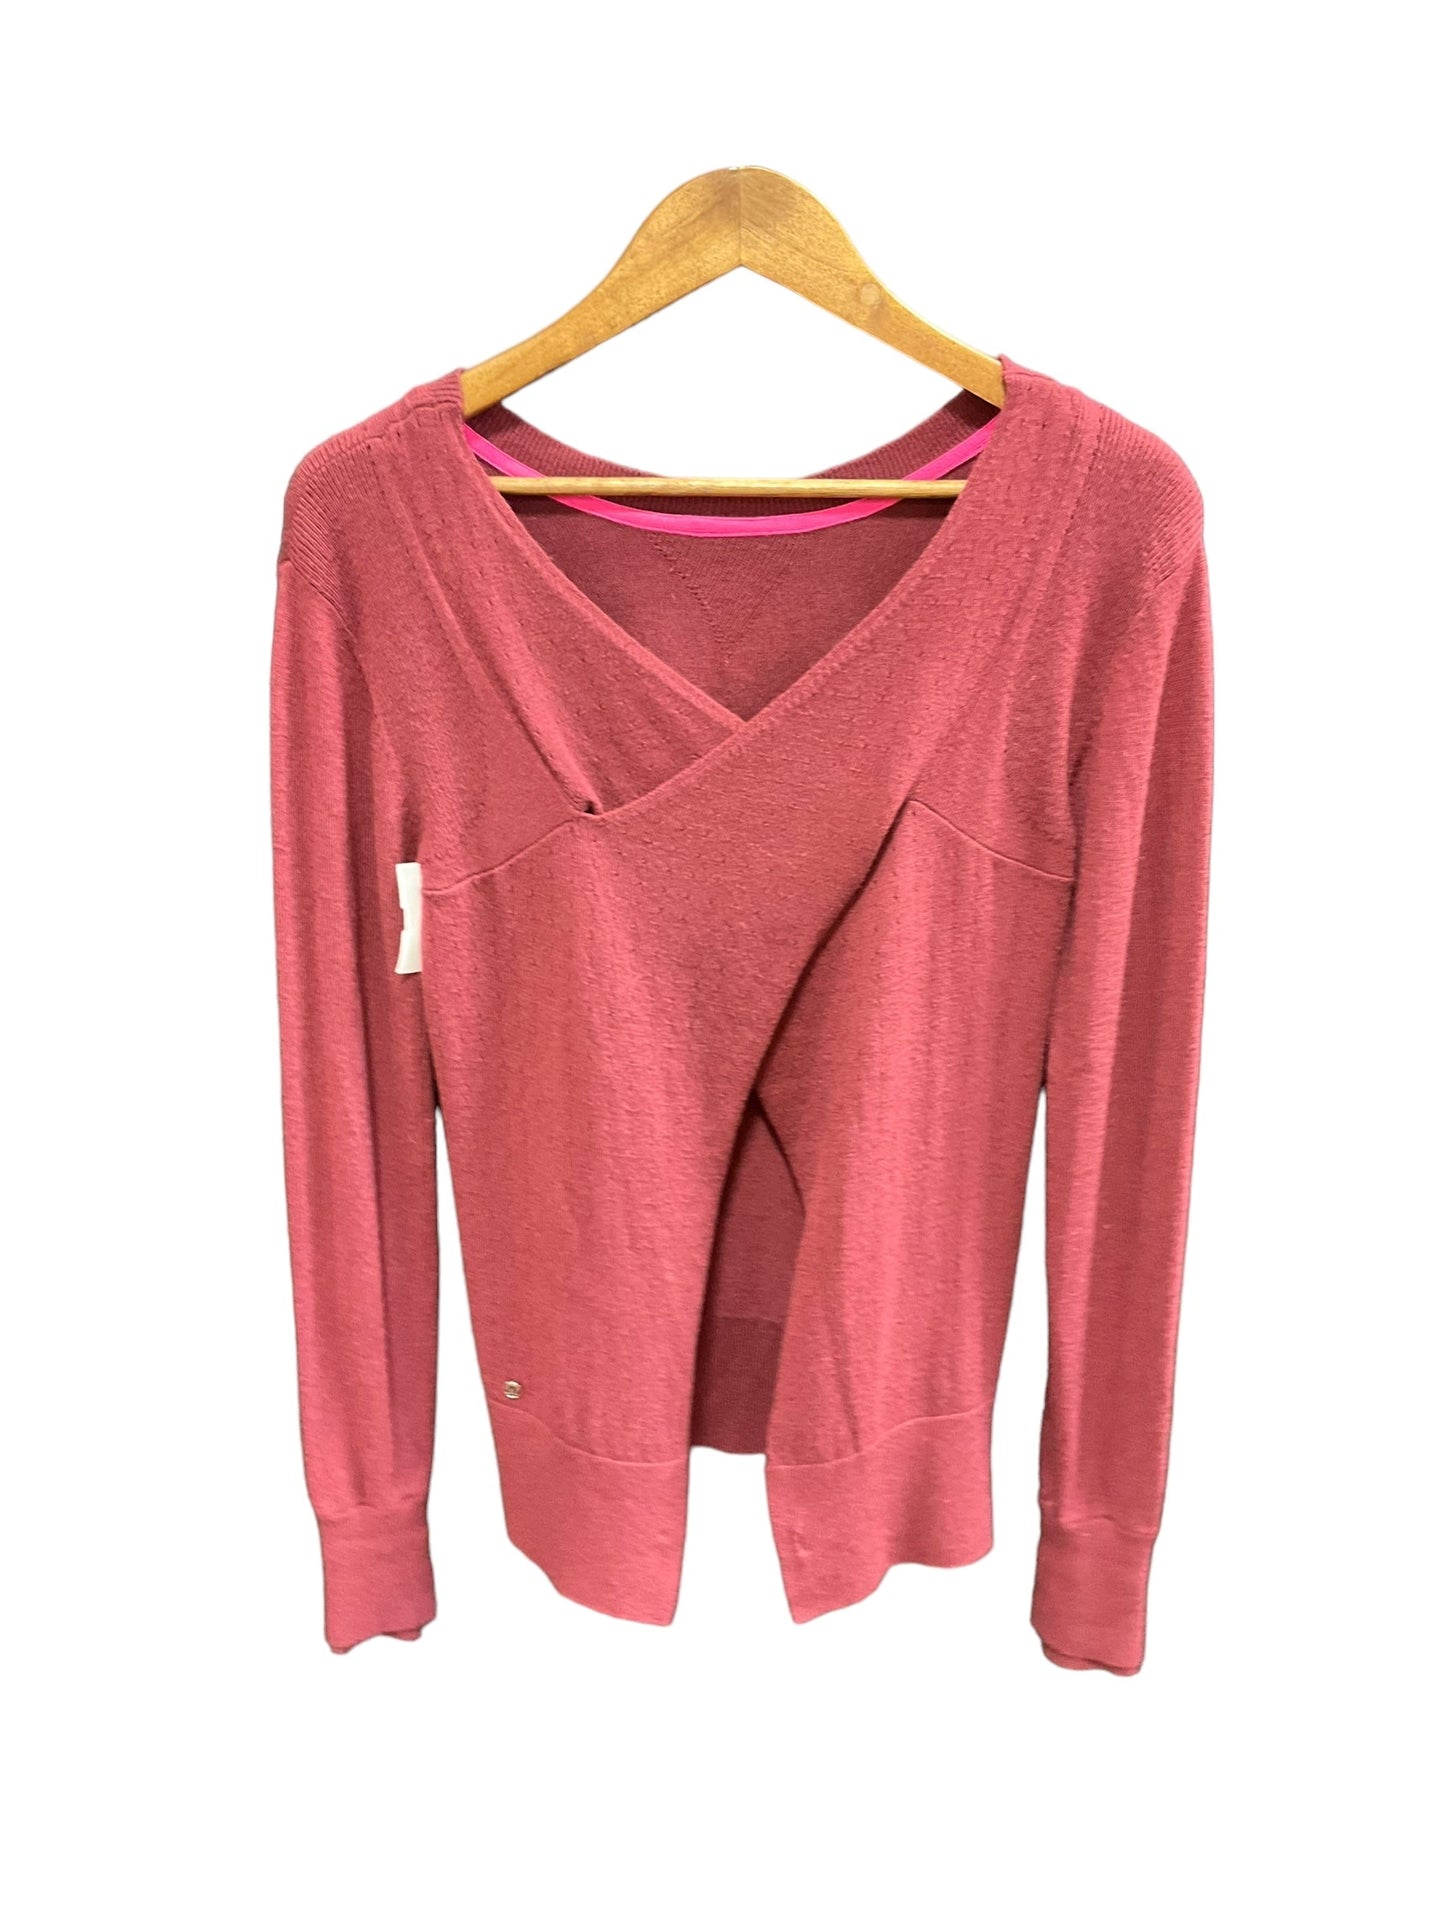 Sweater By Lululemon  Size: S